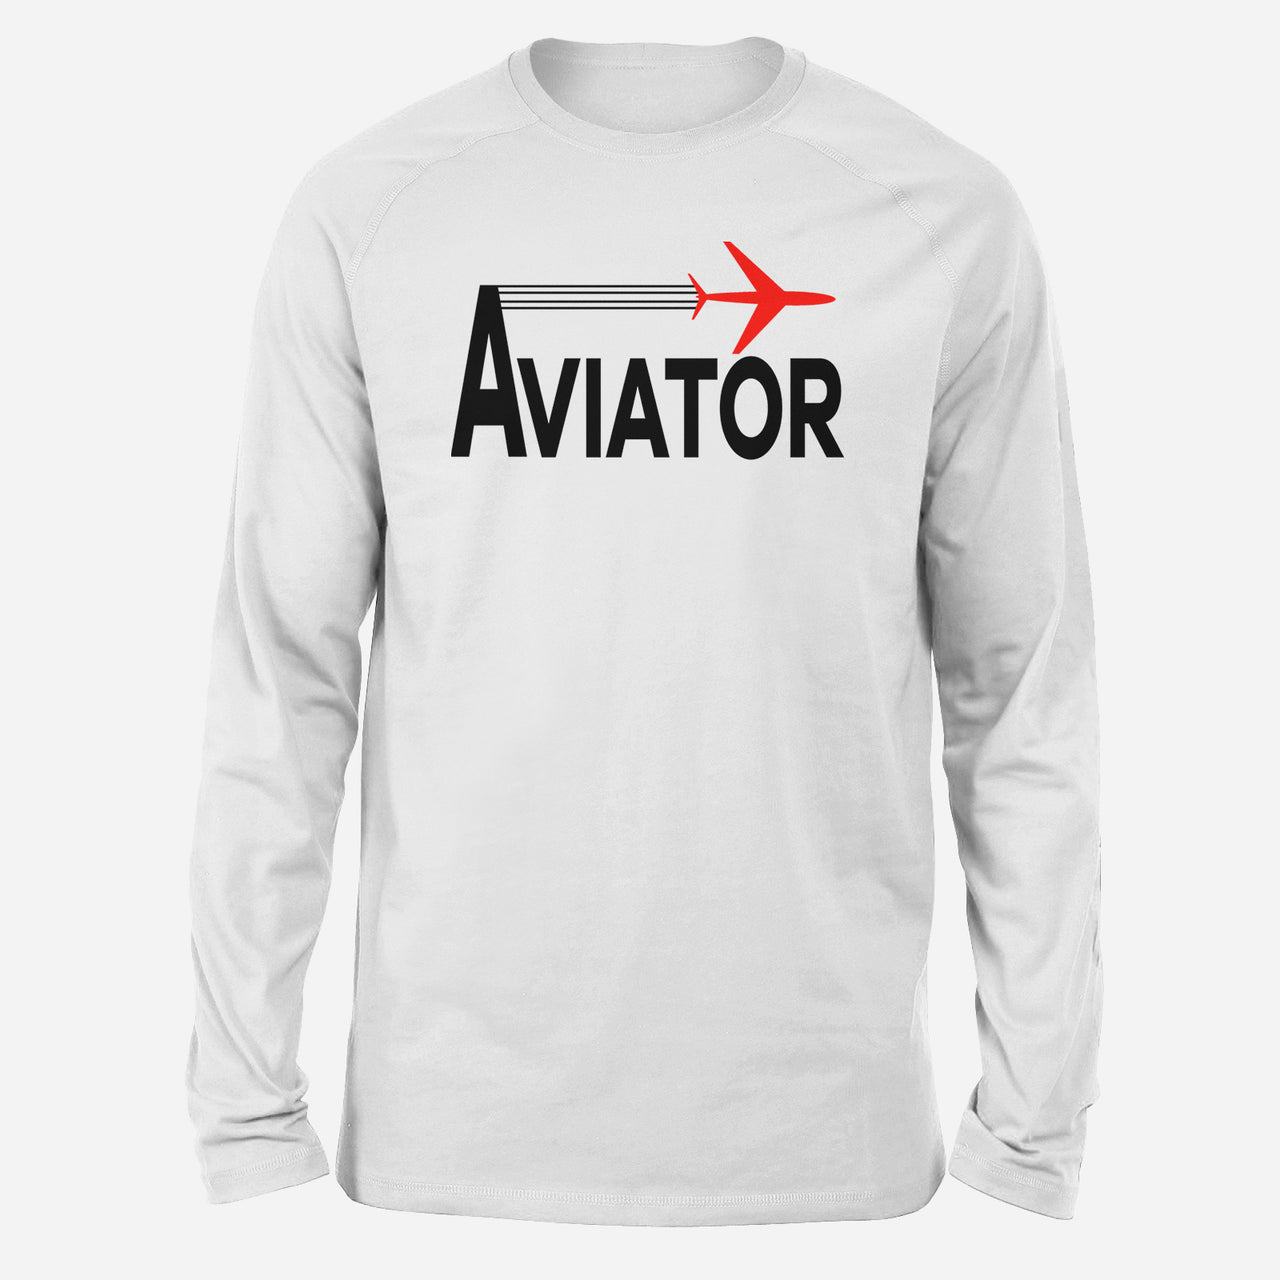 Aviator Designed Long-Sleeve T-Shirts